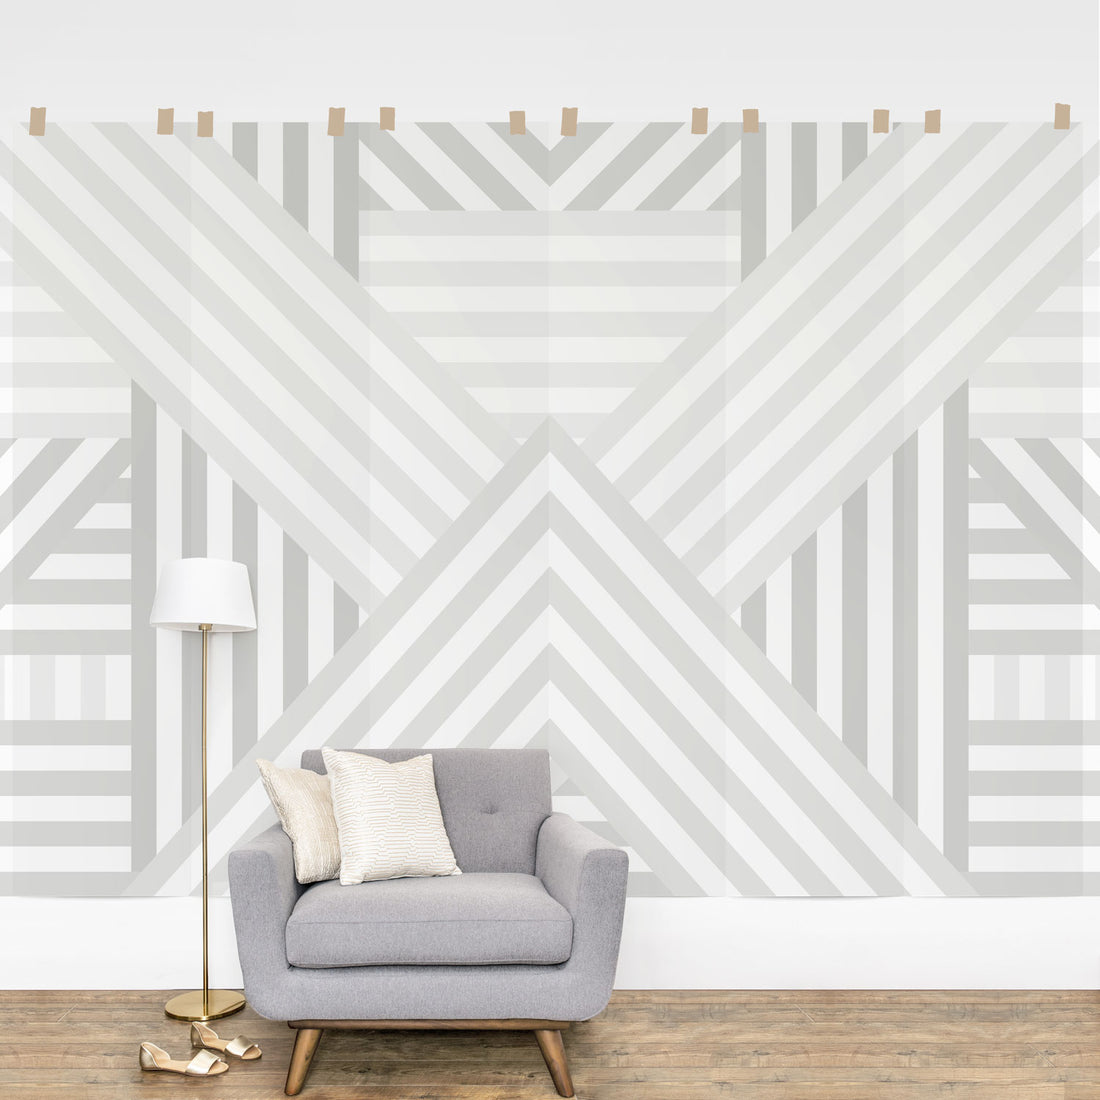 light grey neutral stripes wall mural design for modern interior